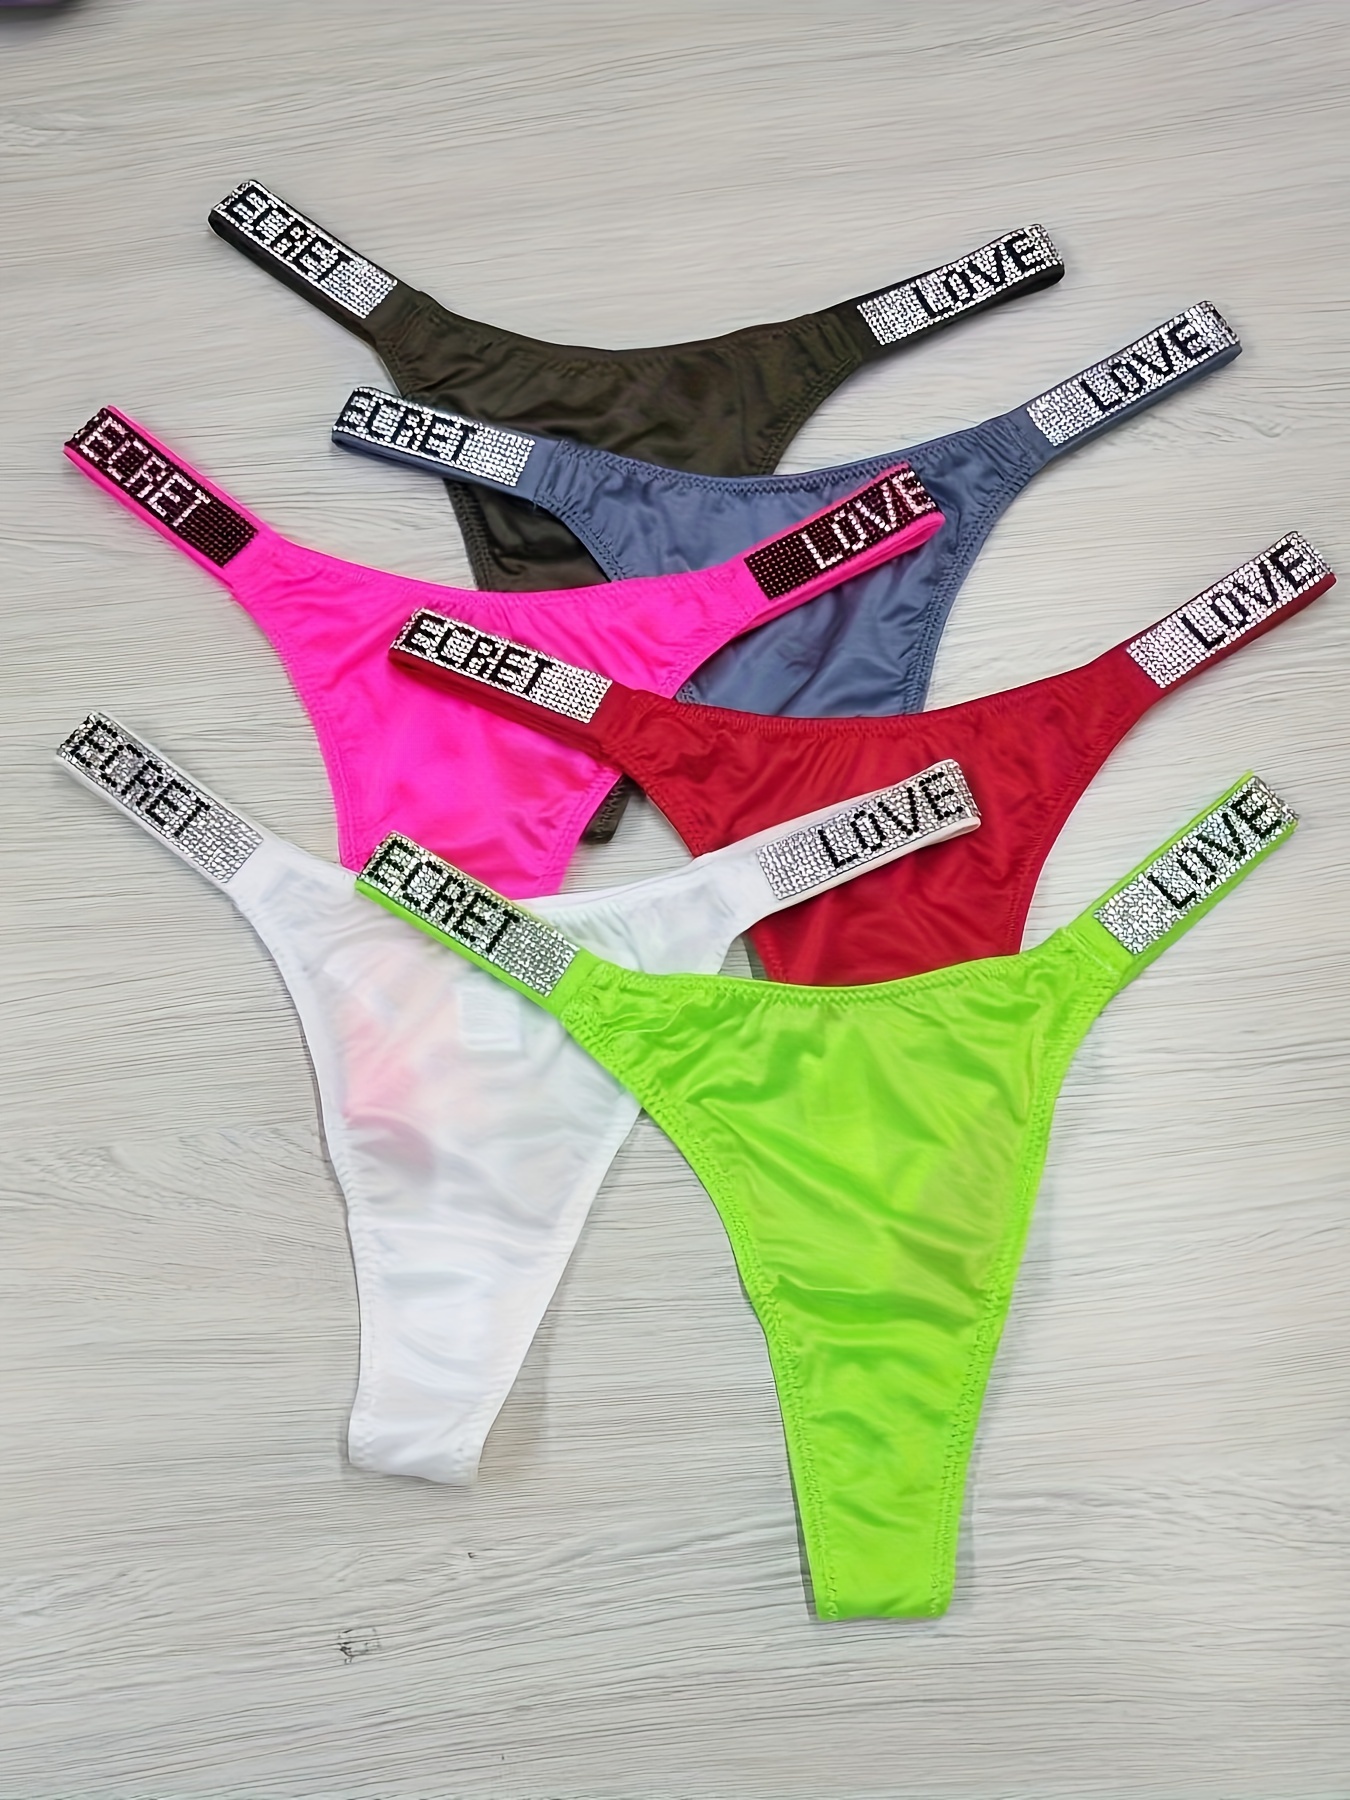 Glossy Ultrathin Sheer Panties See Through Lingerie Shiny Silky Briefs  Underwear